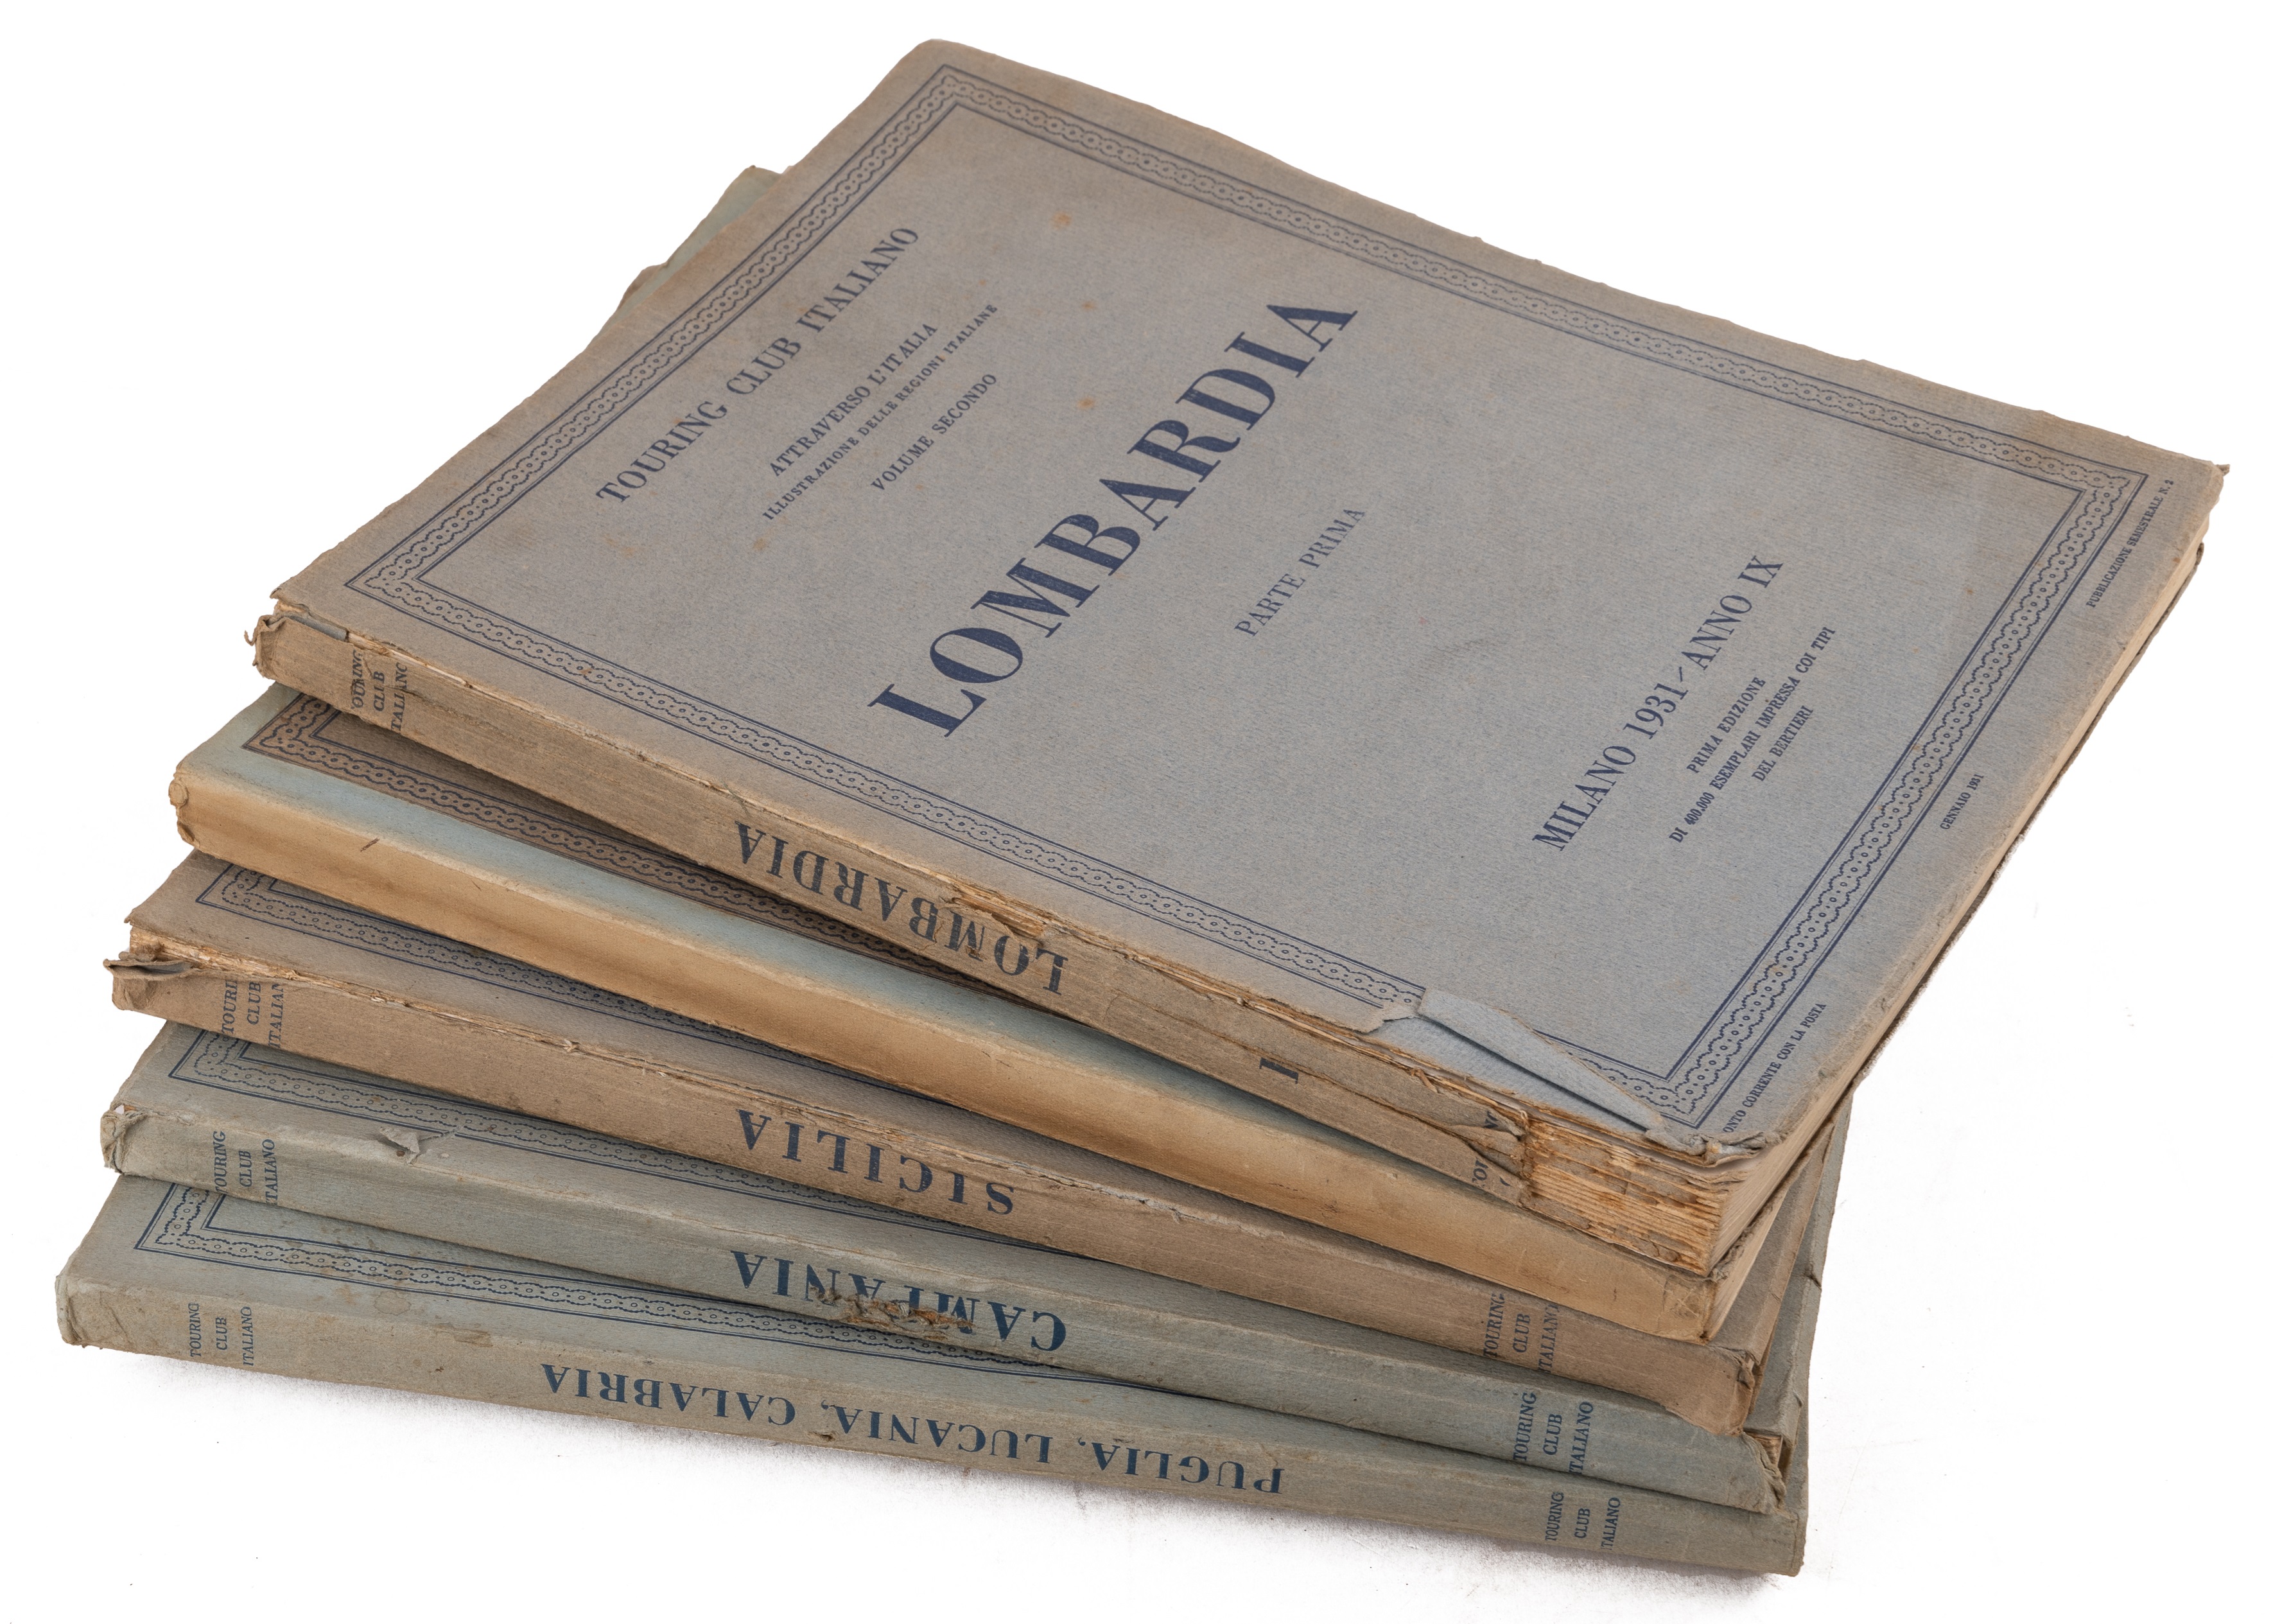 Touring Club. Italiano Milan 1931/2/3/6/7. Lombardia. 2 vols. Sicilia Campania and Puglia,